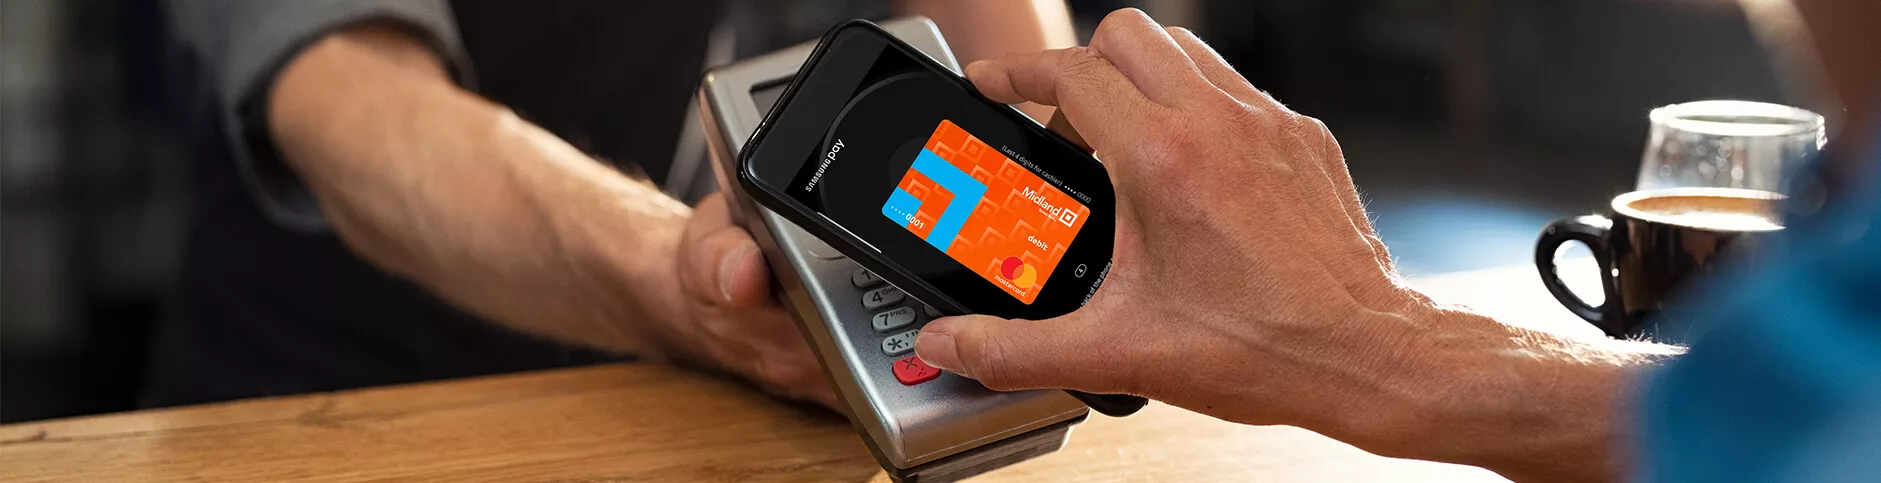 customer using mobile wallet